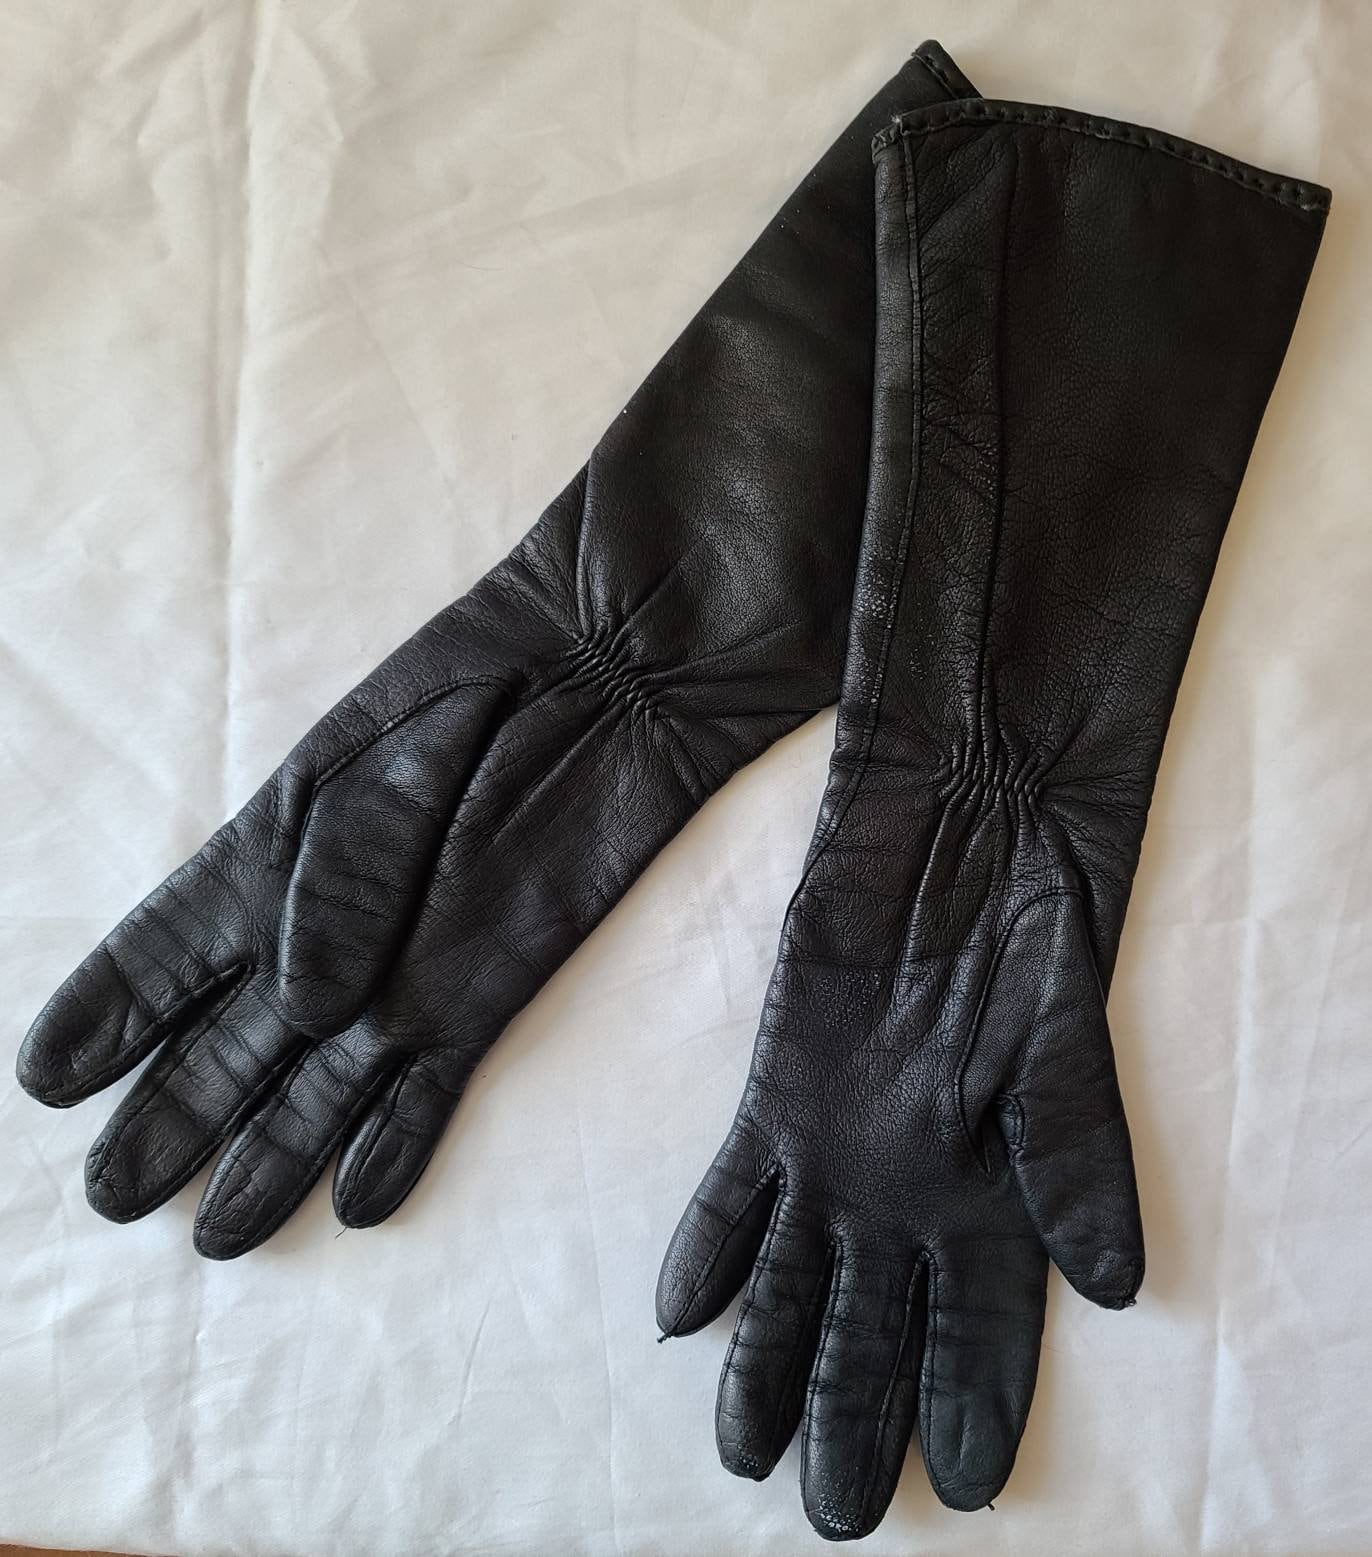 SALE Vintage Leather Gloves 1980s 90s Midlength Black Leather Gloves Knit Lining Boho 6 1/2